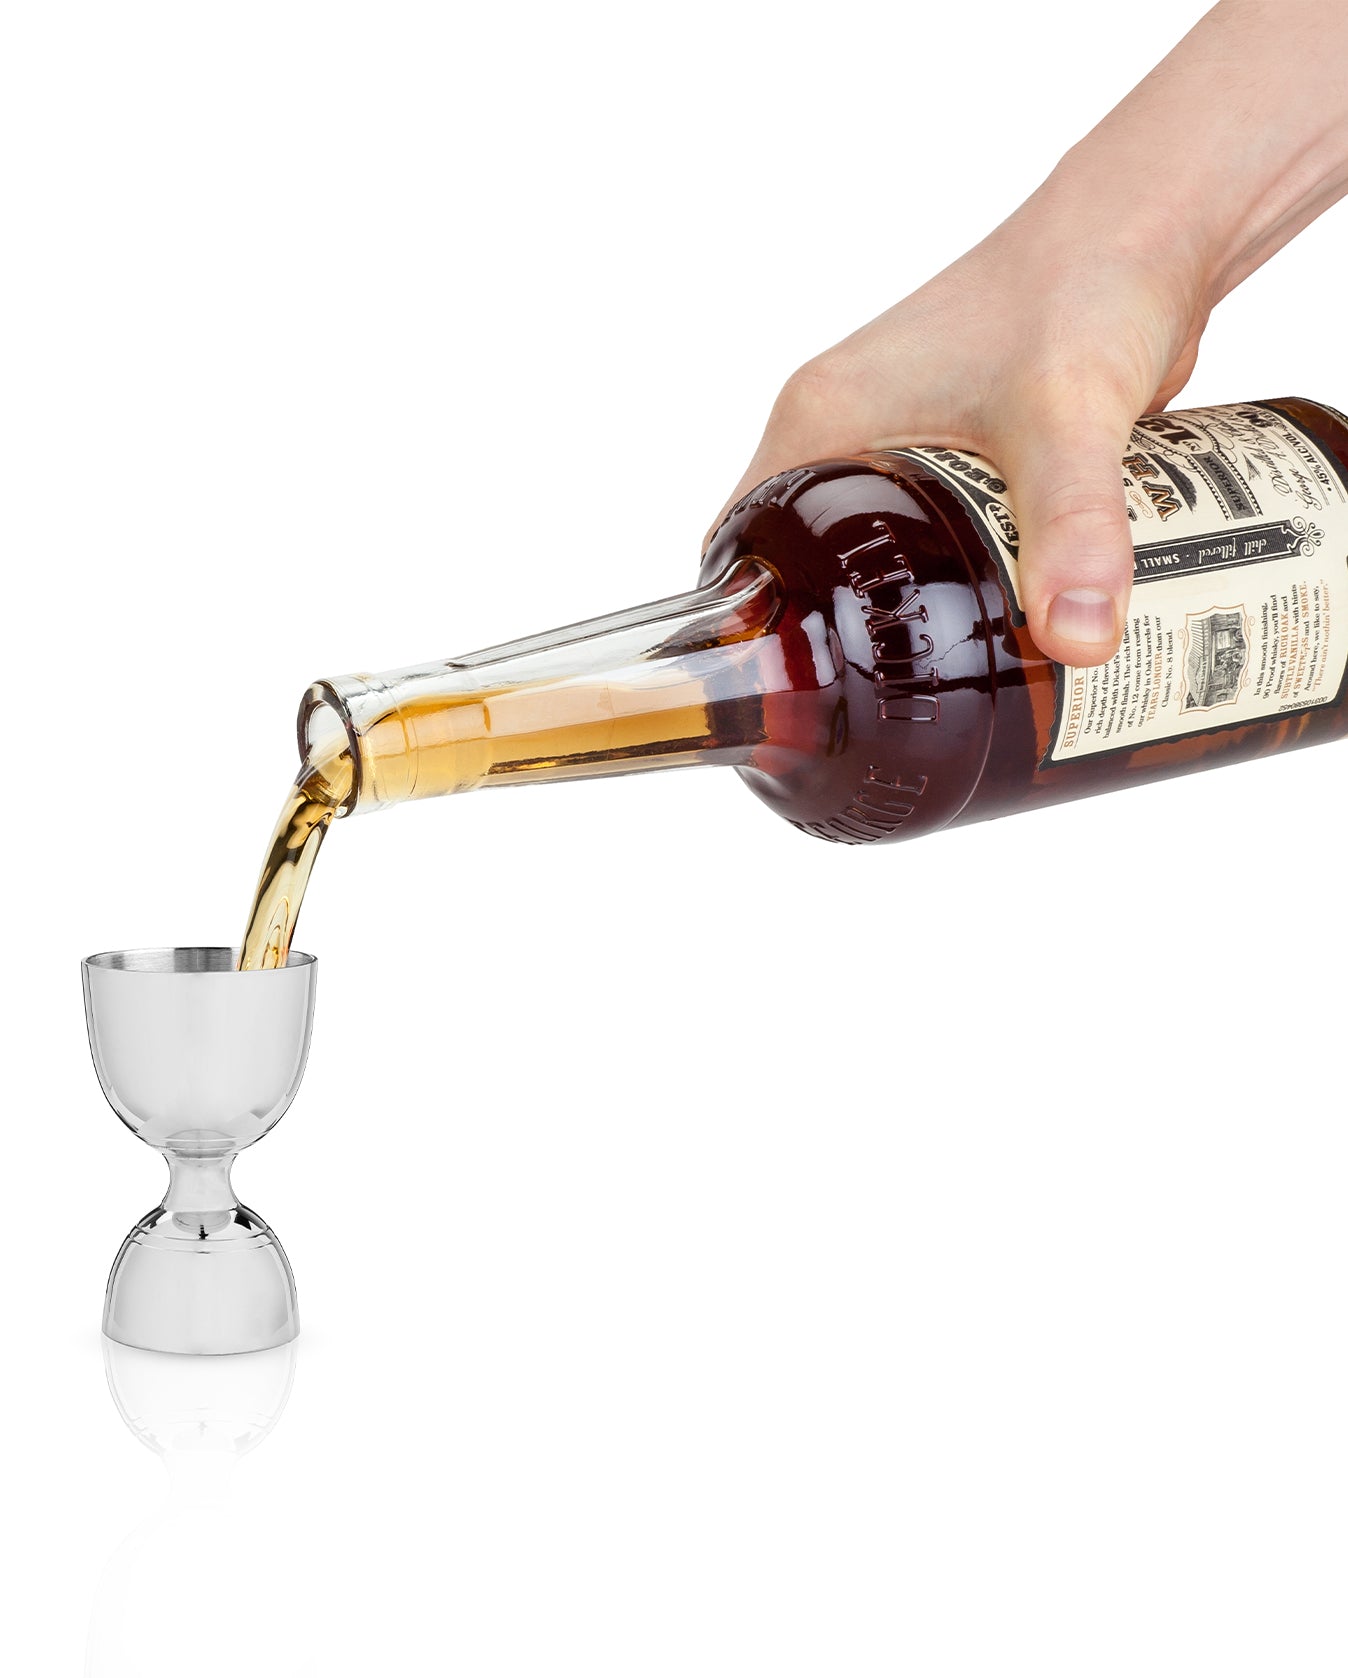 Viski - Gold Heavyweight Cocktail Shaker